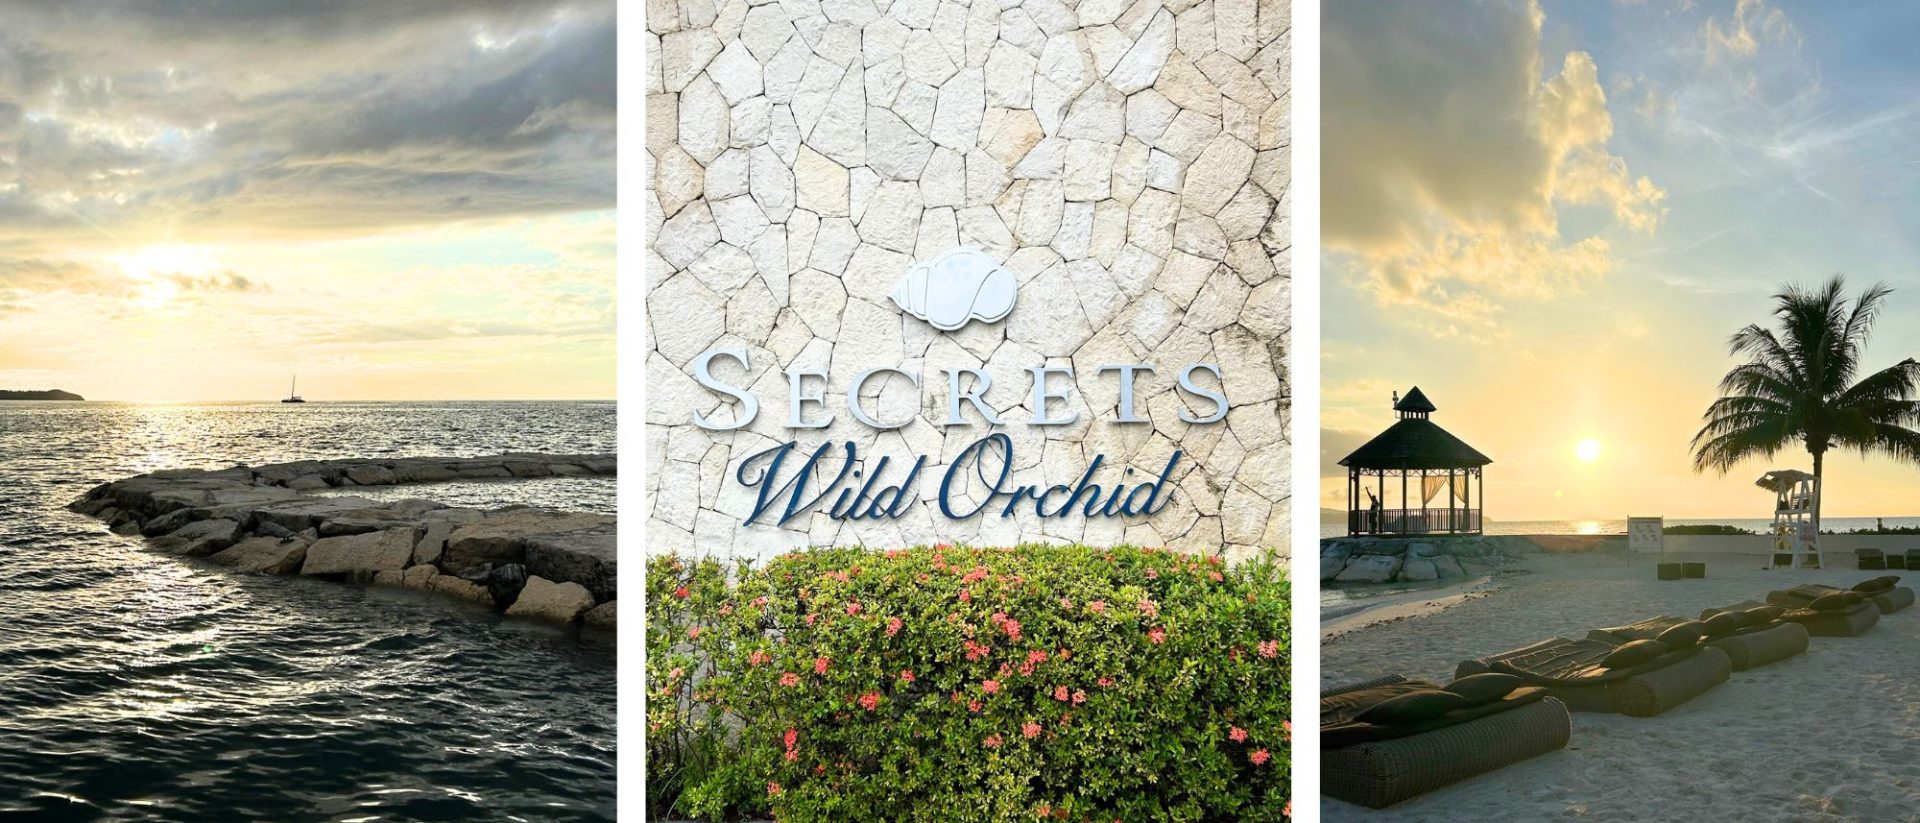 Secret's wild orchid resort & spa.